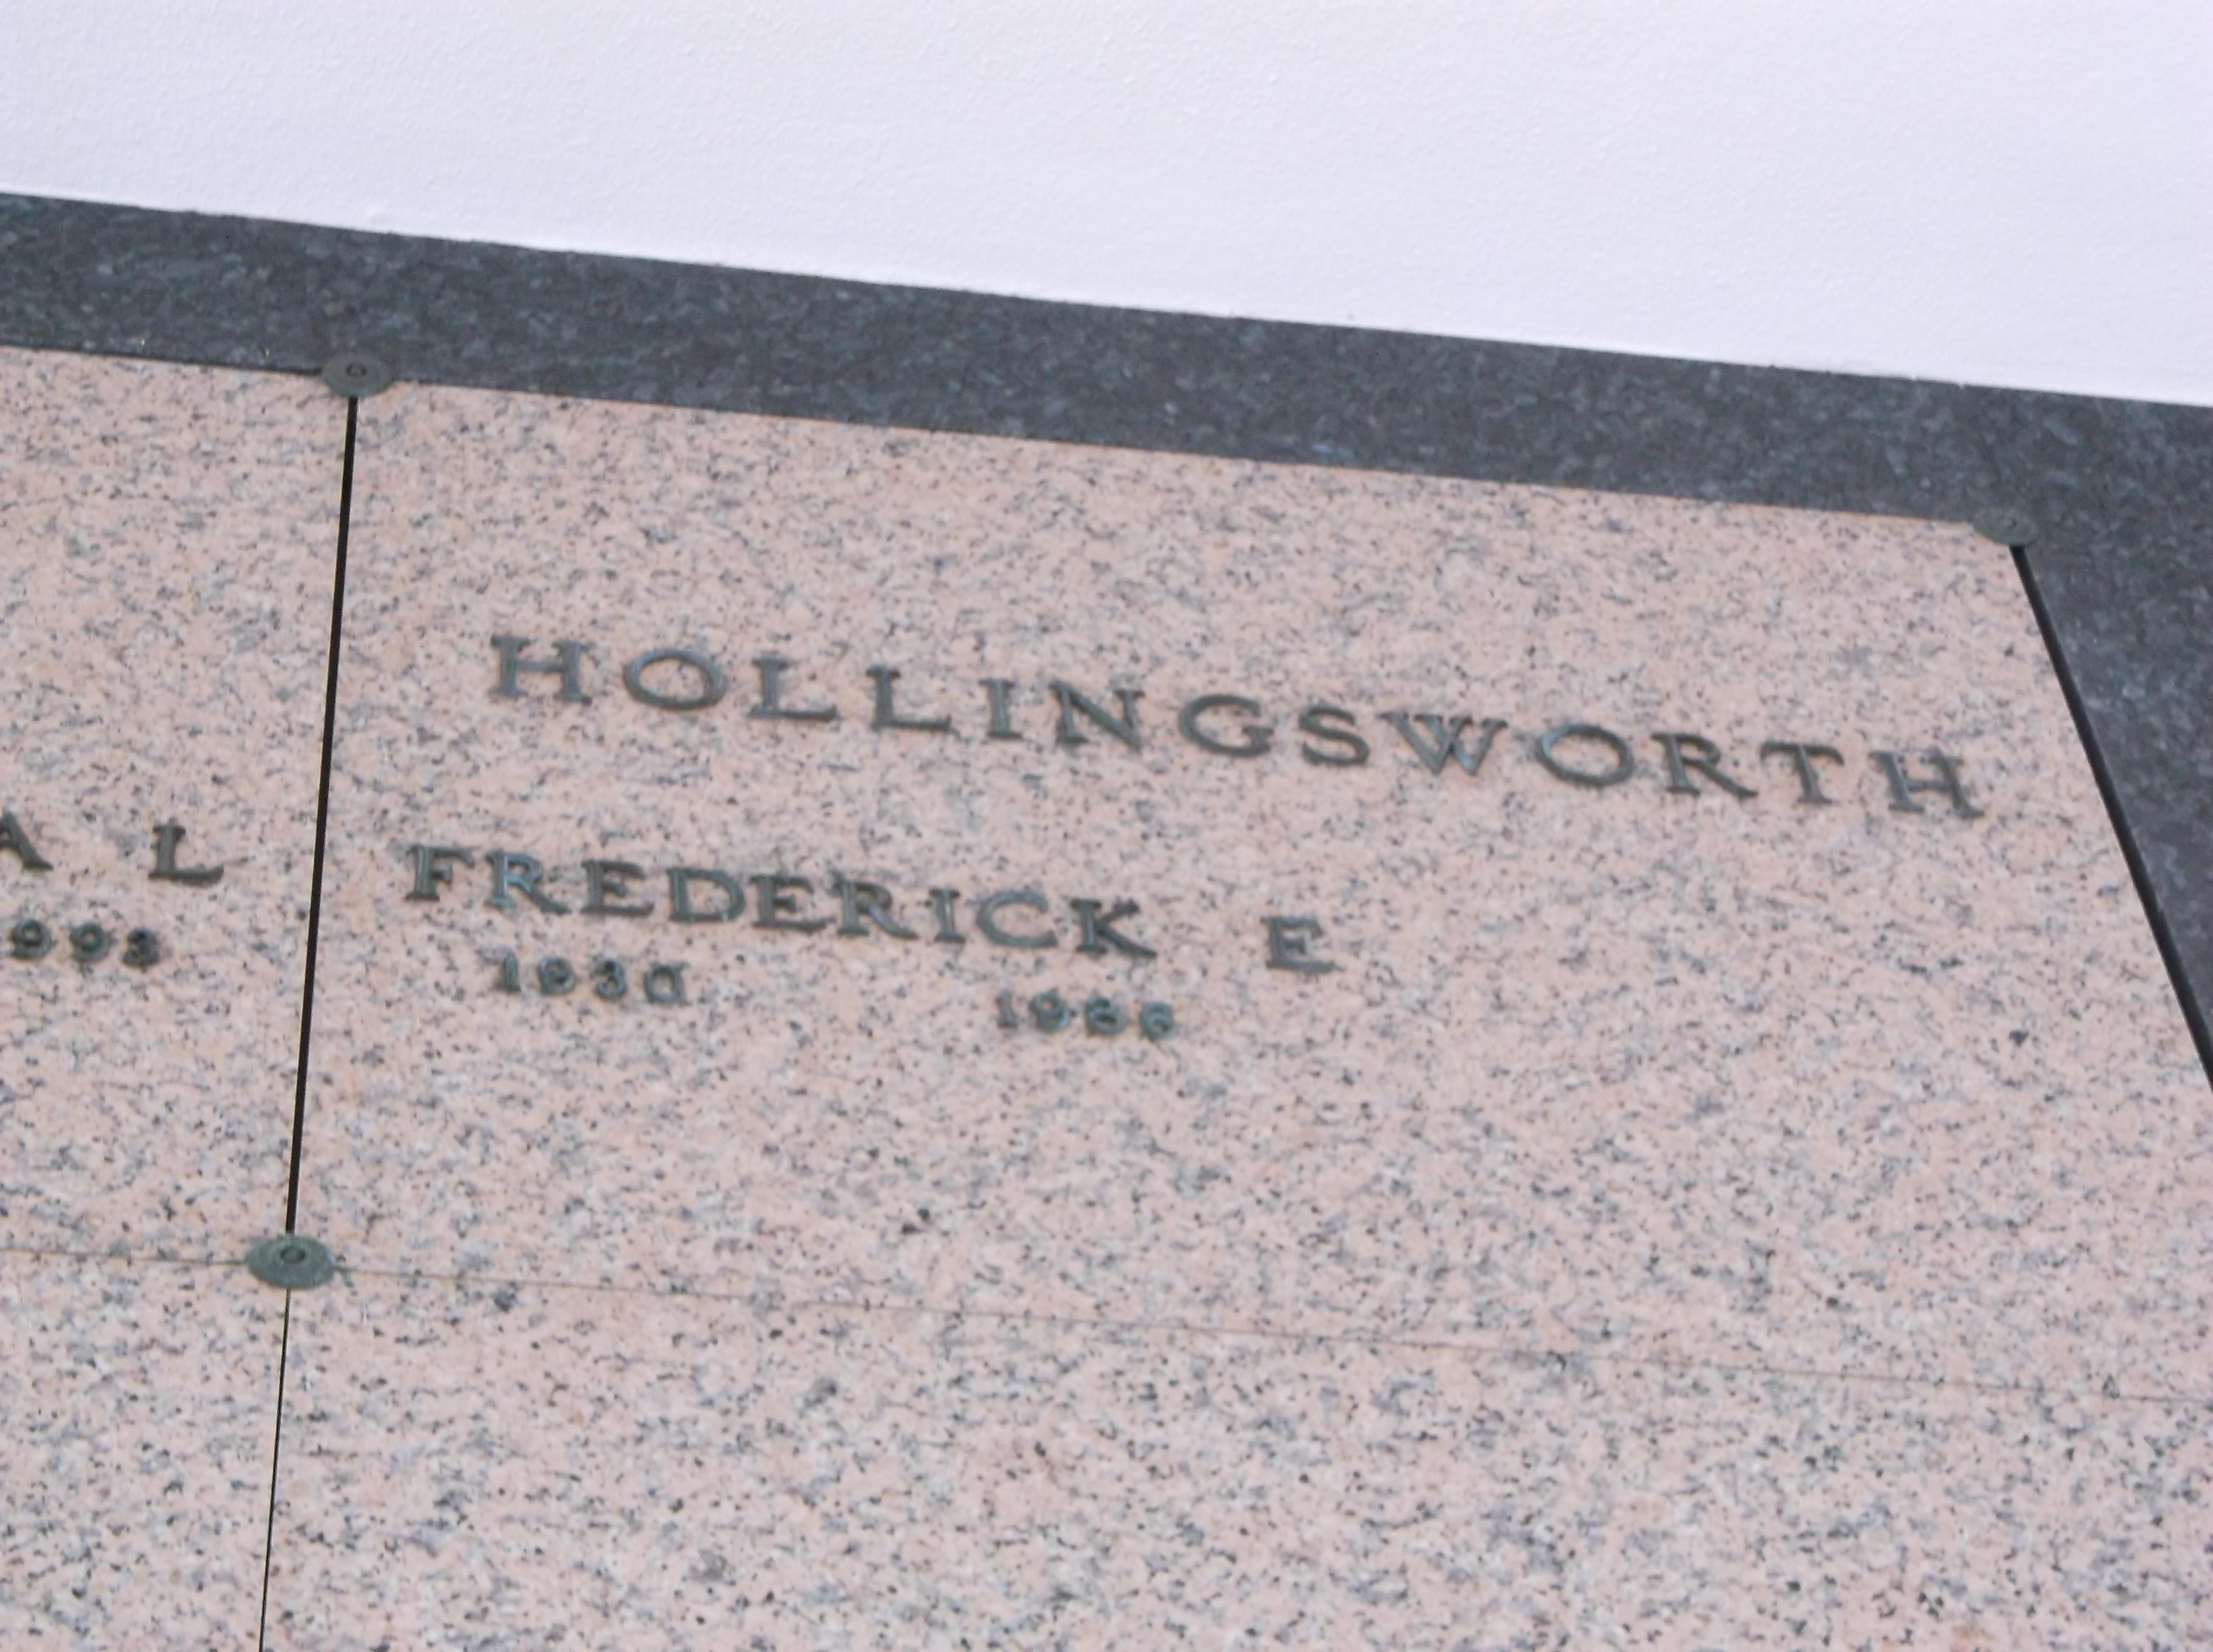 Frederick E Hollingsworth